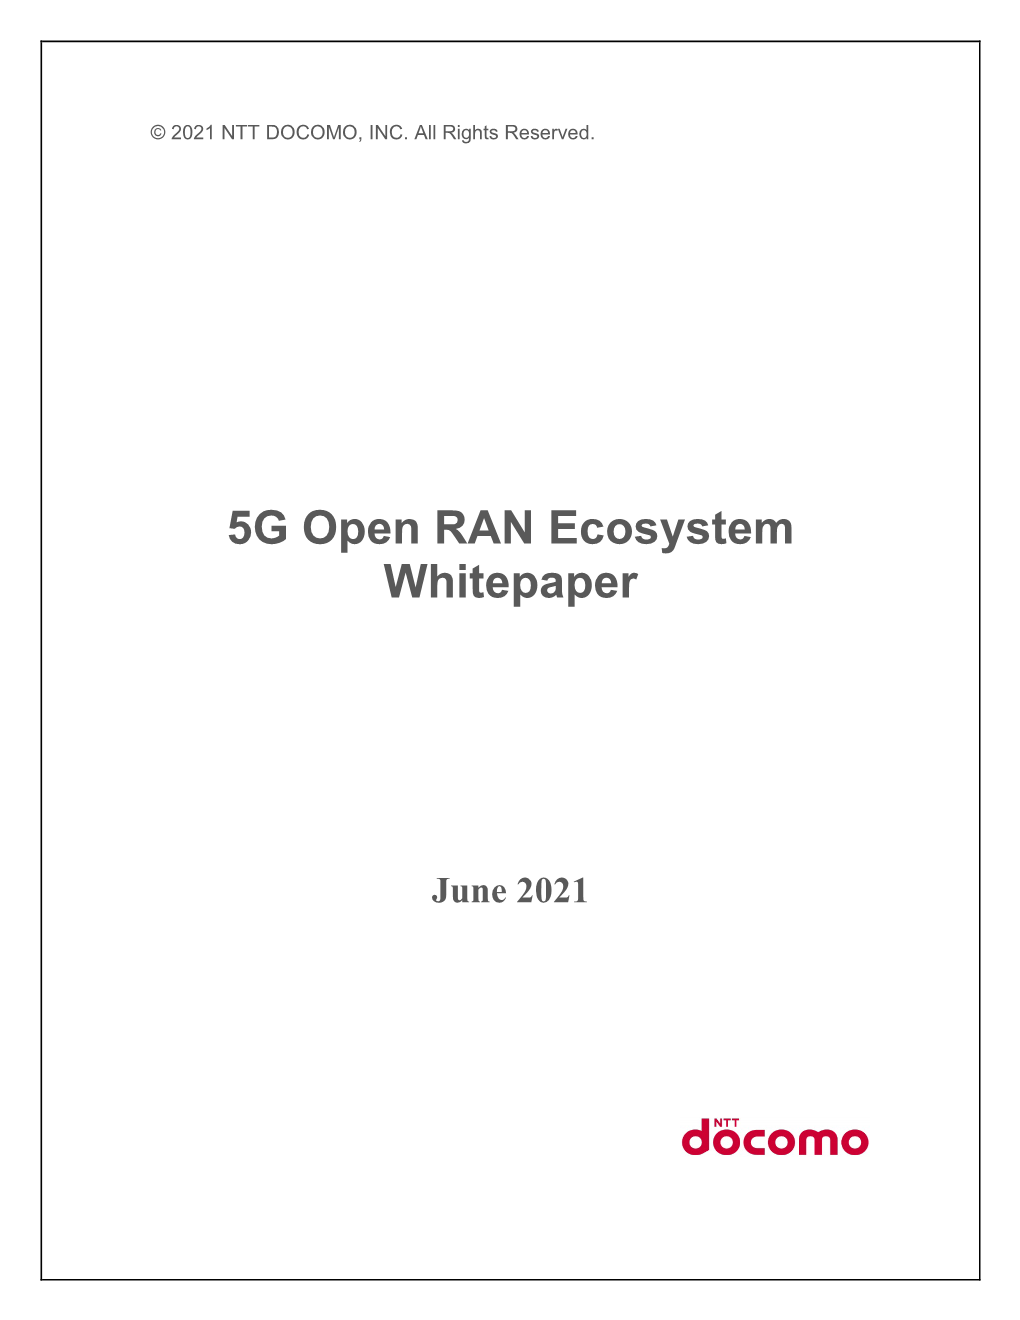 5G Open RAN Ecosystem Whitepaper